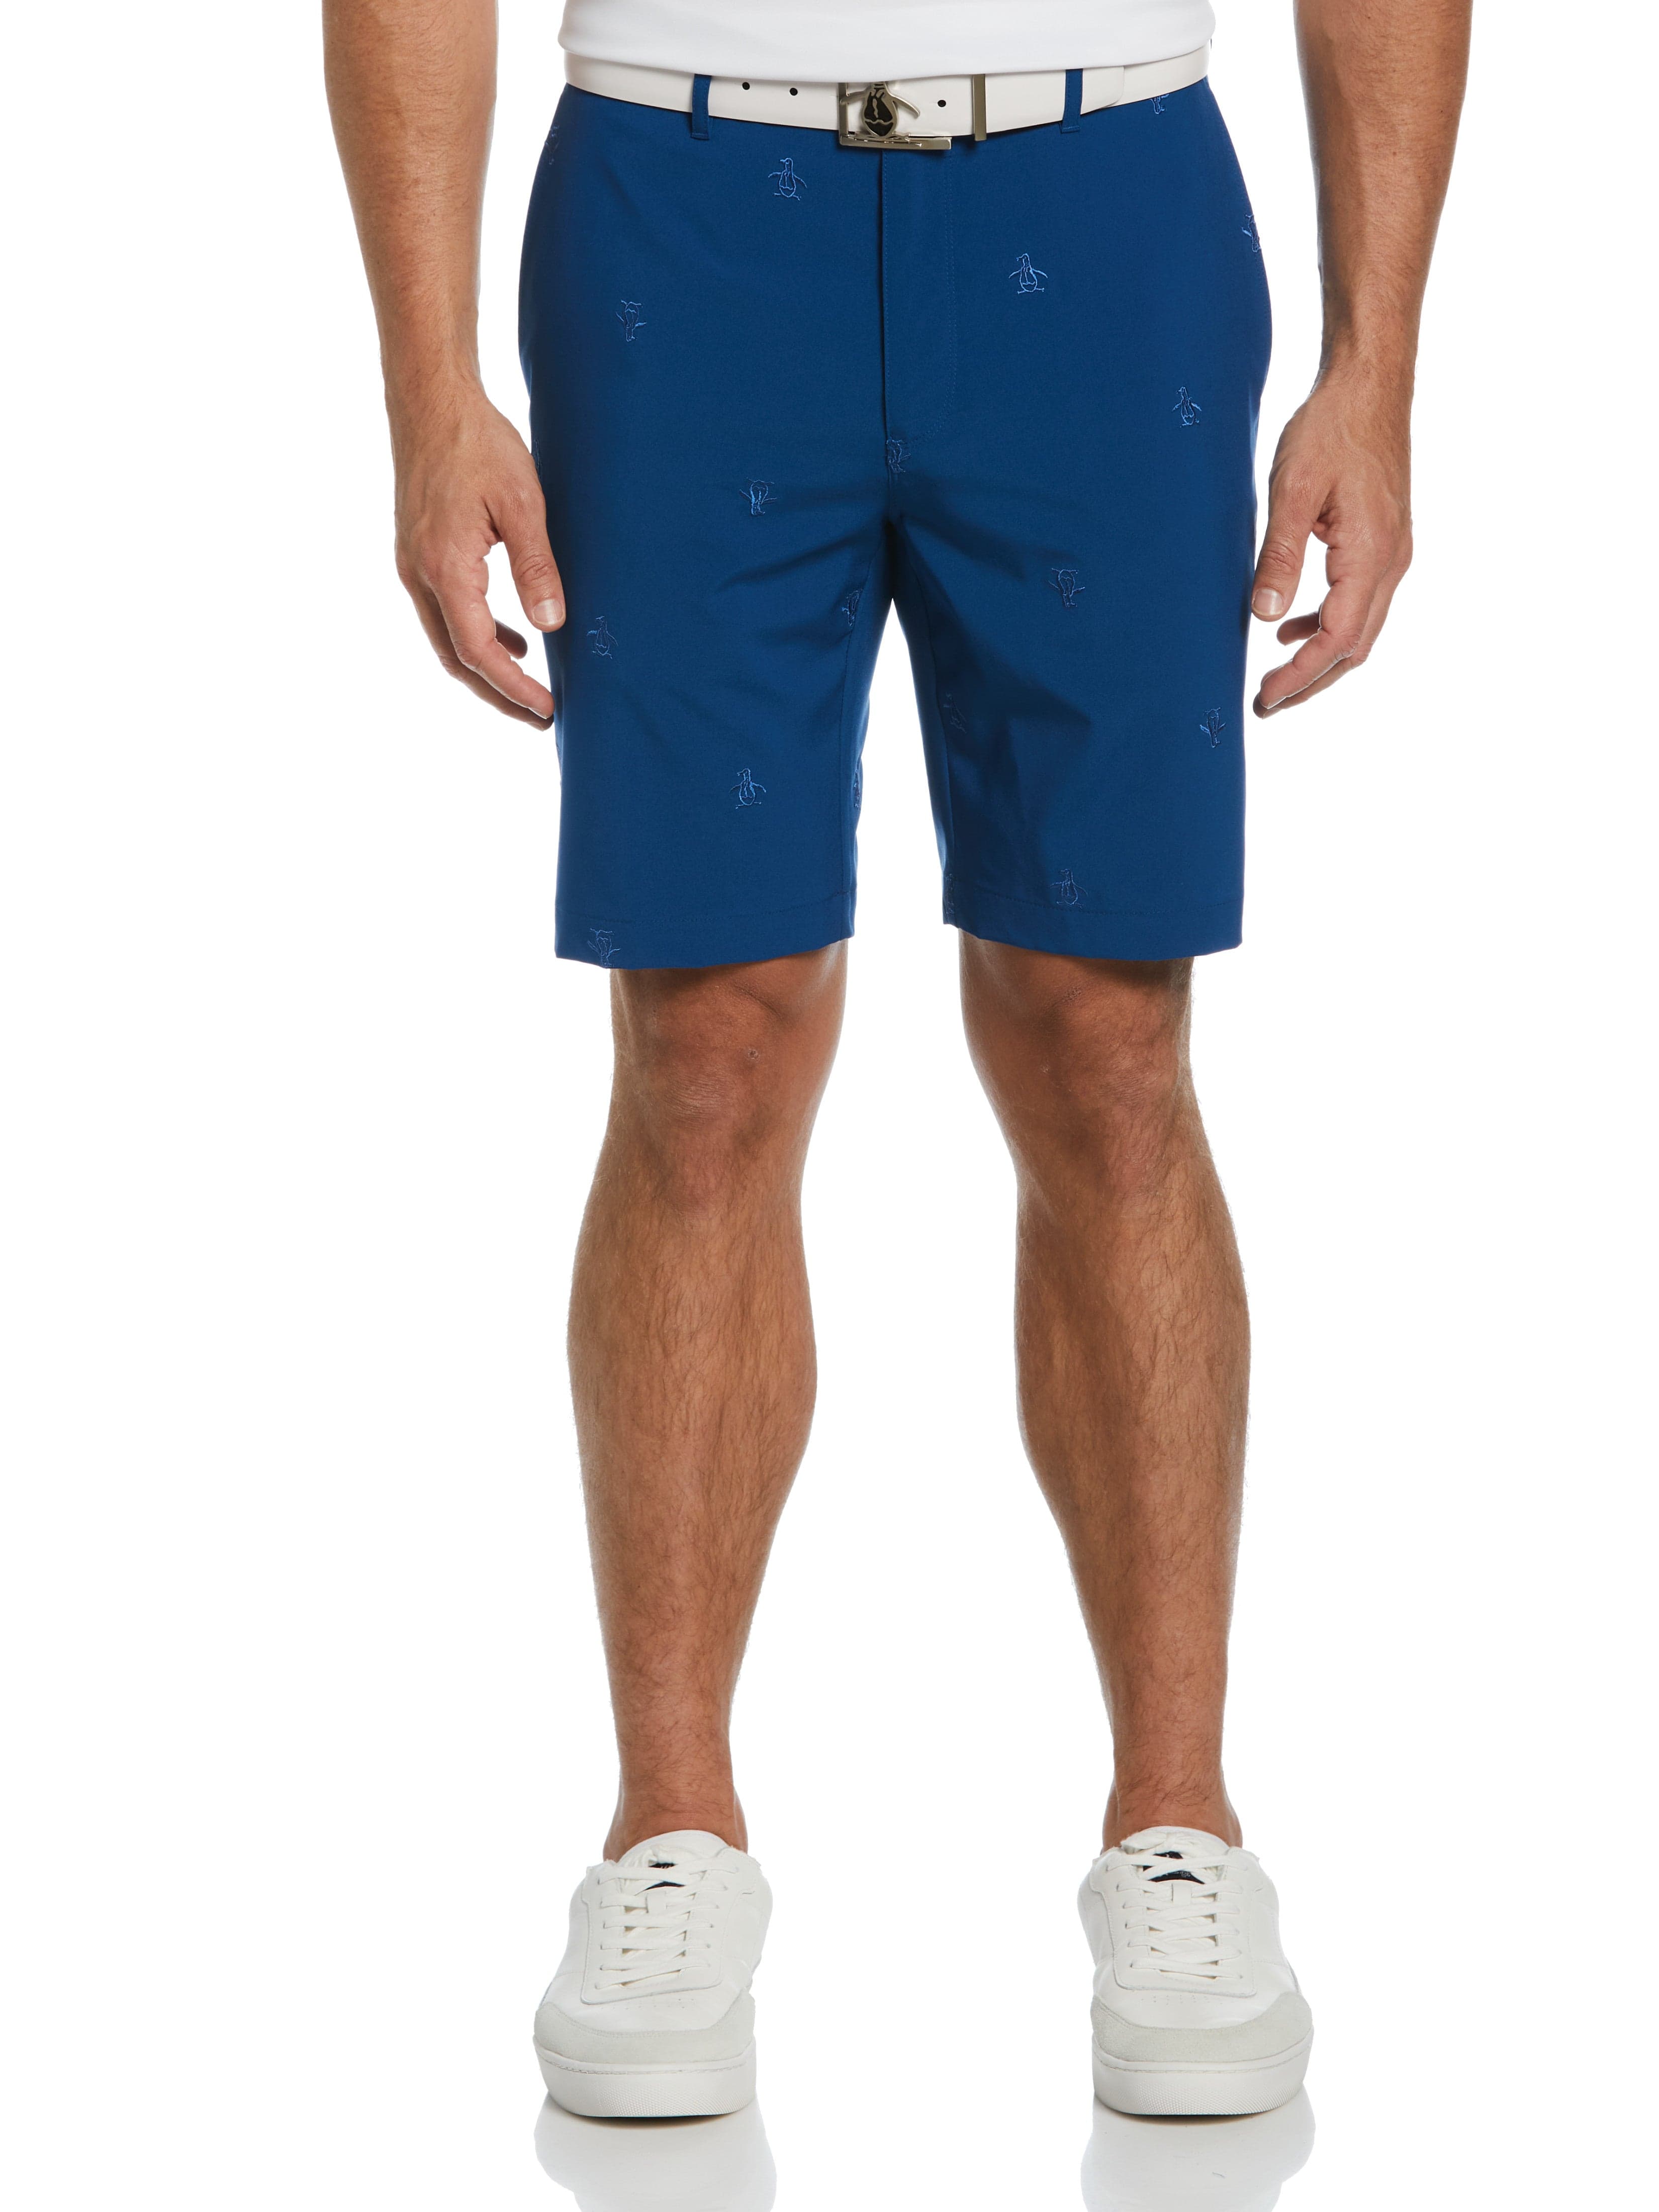 Original Penguin Mens Allover Pete Embroidered Golf Shorts, Size 29, Blueberry Pancake, Polyester/Spandex | Golf Apparel Shop